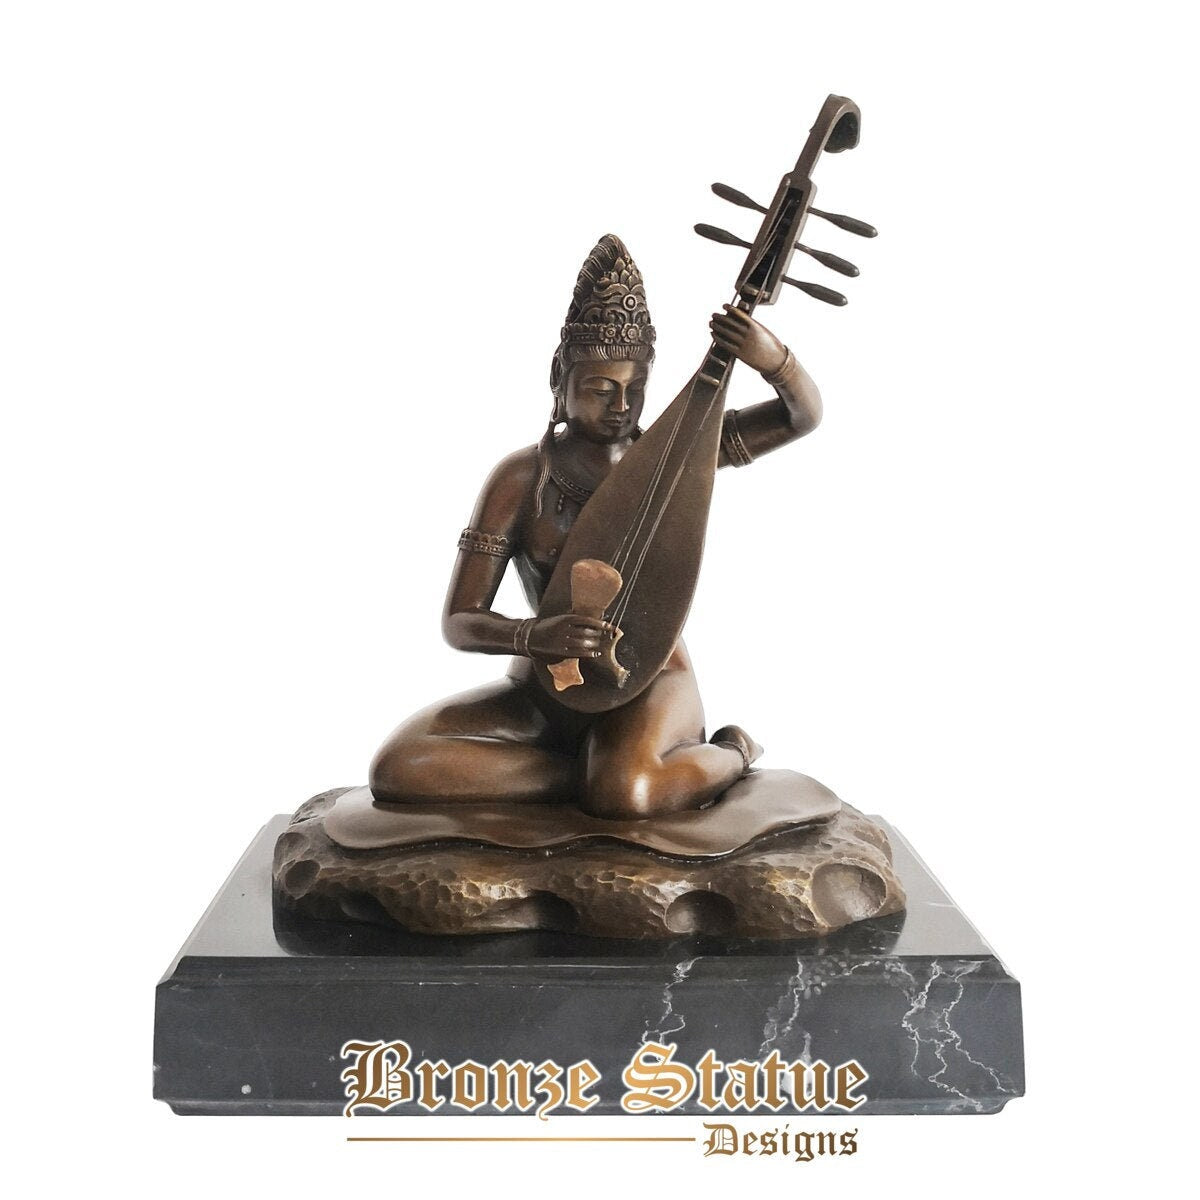 Bronze saraswati sculpture hindu mythology wisdom wealth goddess india buddha figurine statue art for business gift